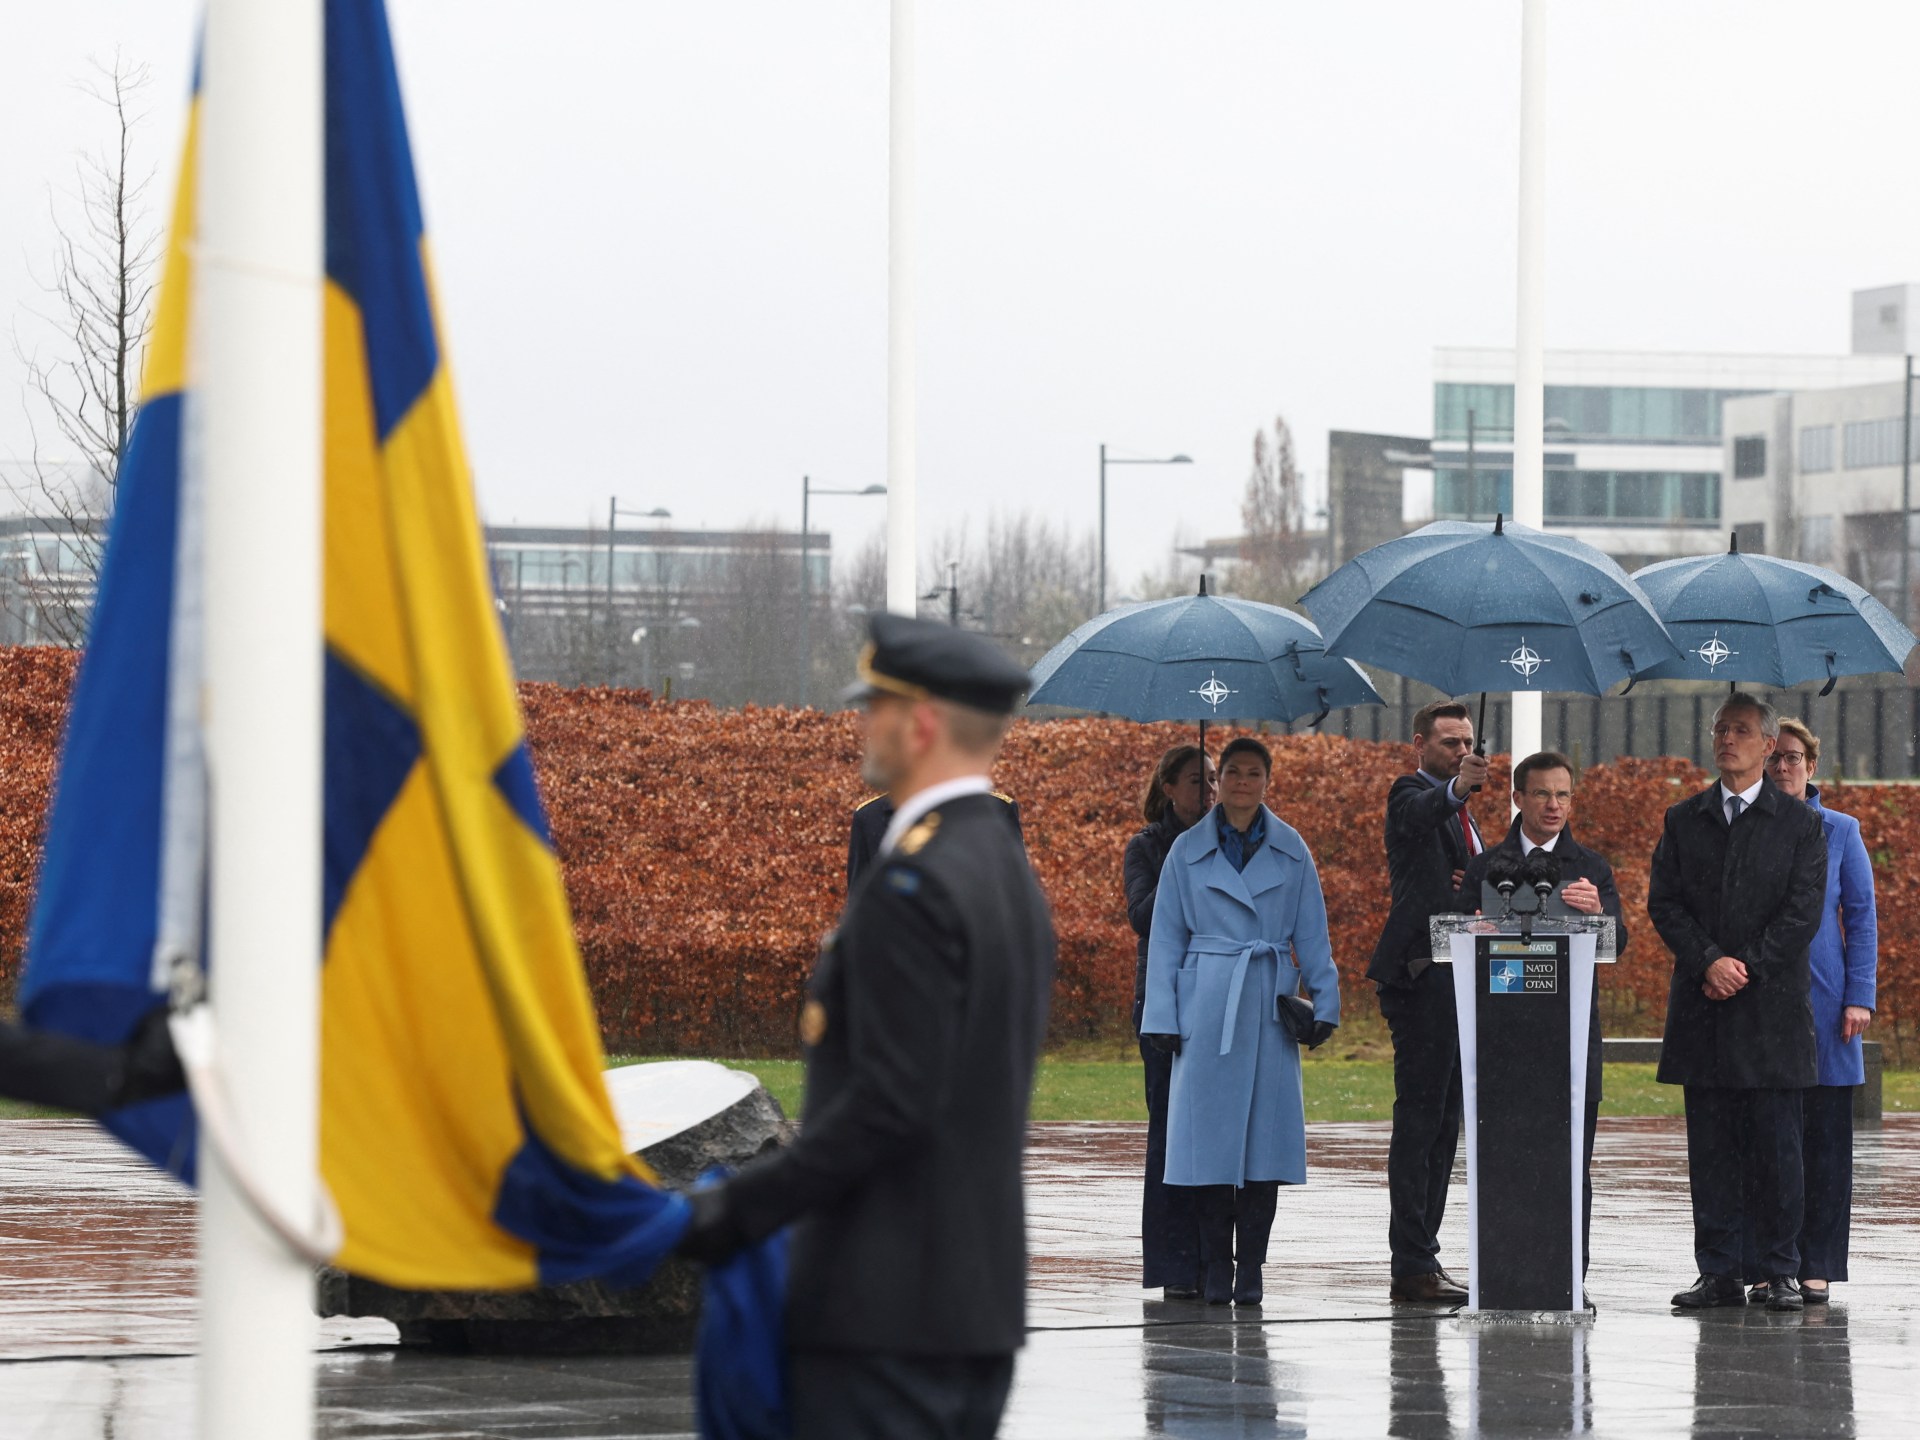 Flag of NATO’s 32nd member, Sweden, raised at alliance’s headquarters | News